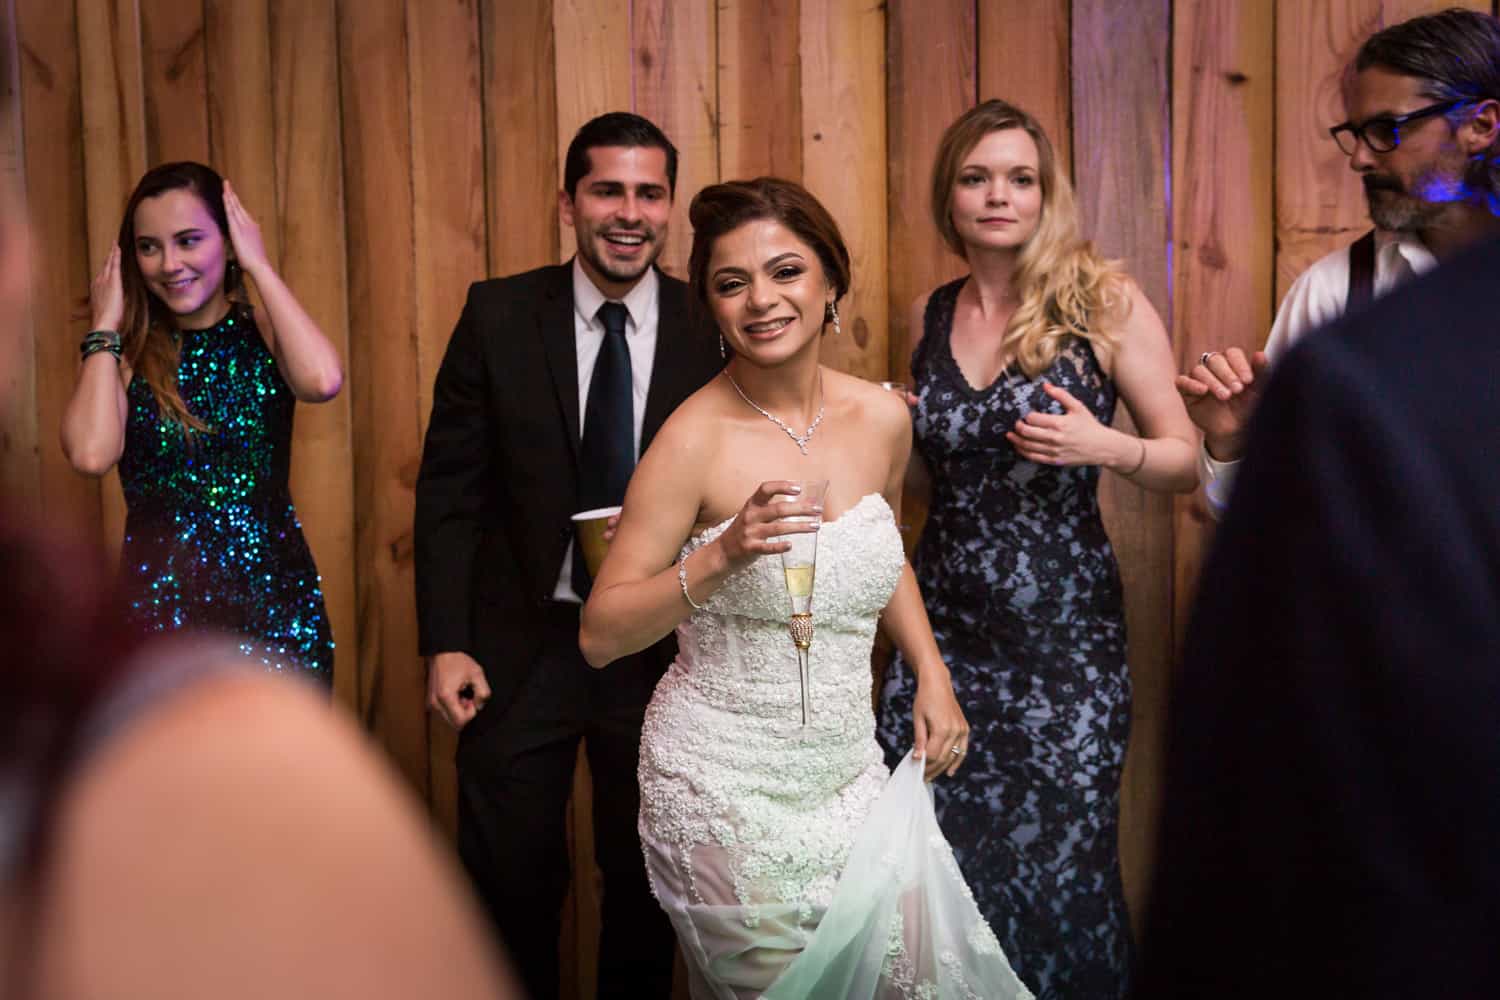 Bride dancing with guests during Florida wedding reception